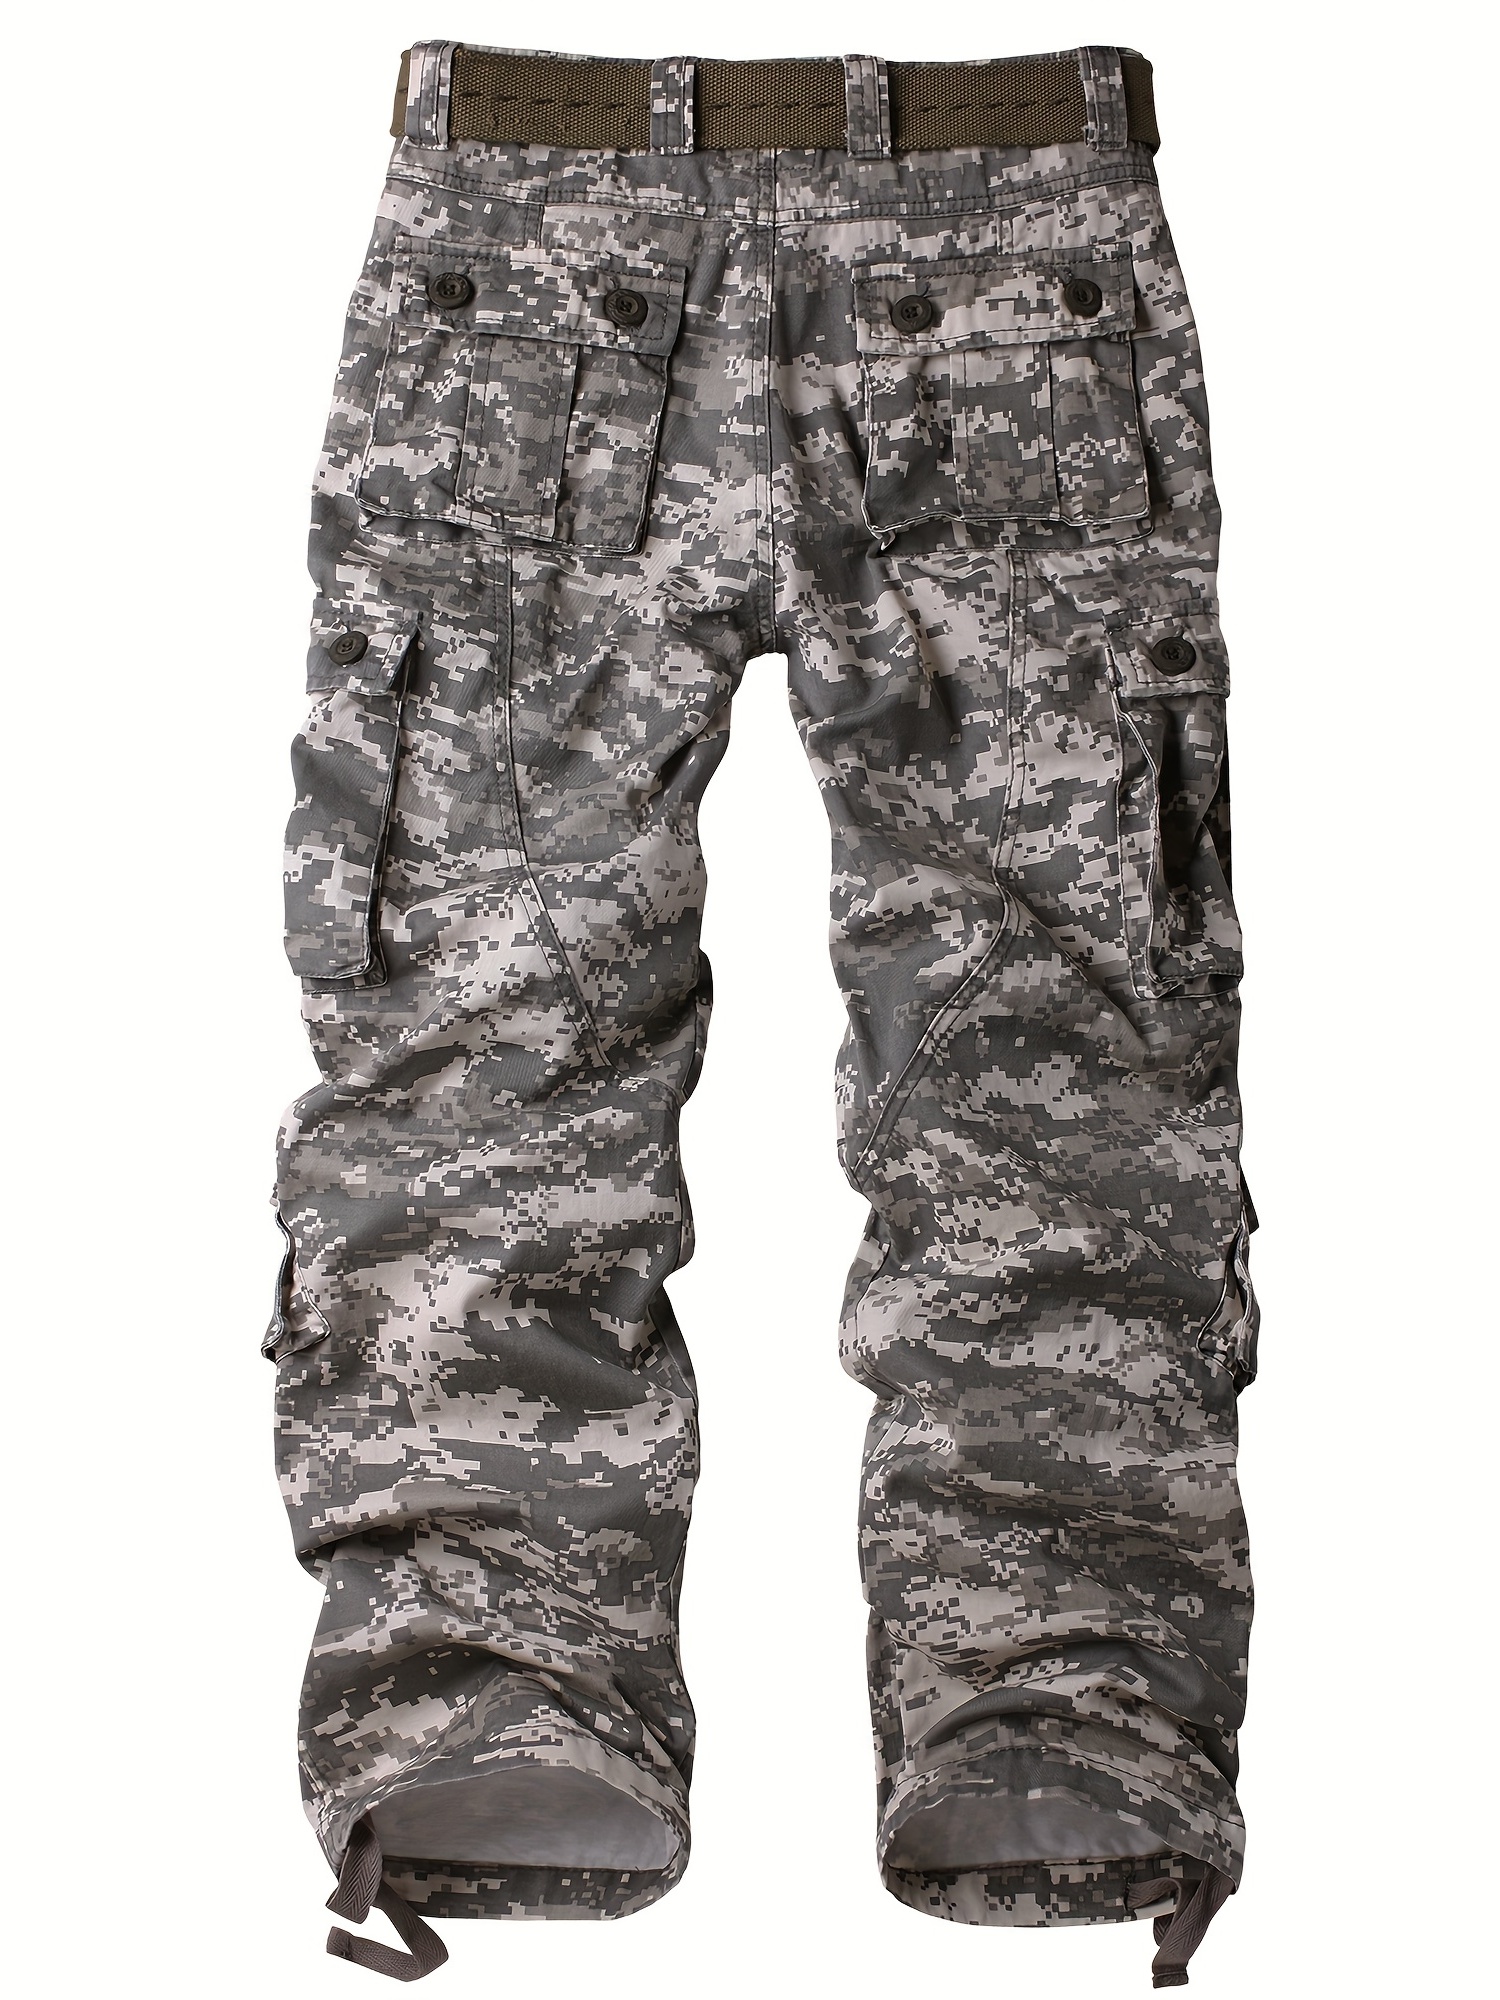 Pantalones Largos Casuales De Moda Camuflaje Para Hombre Militares Cargo New